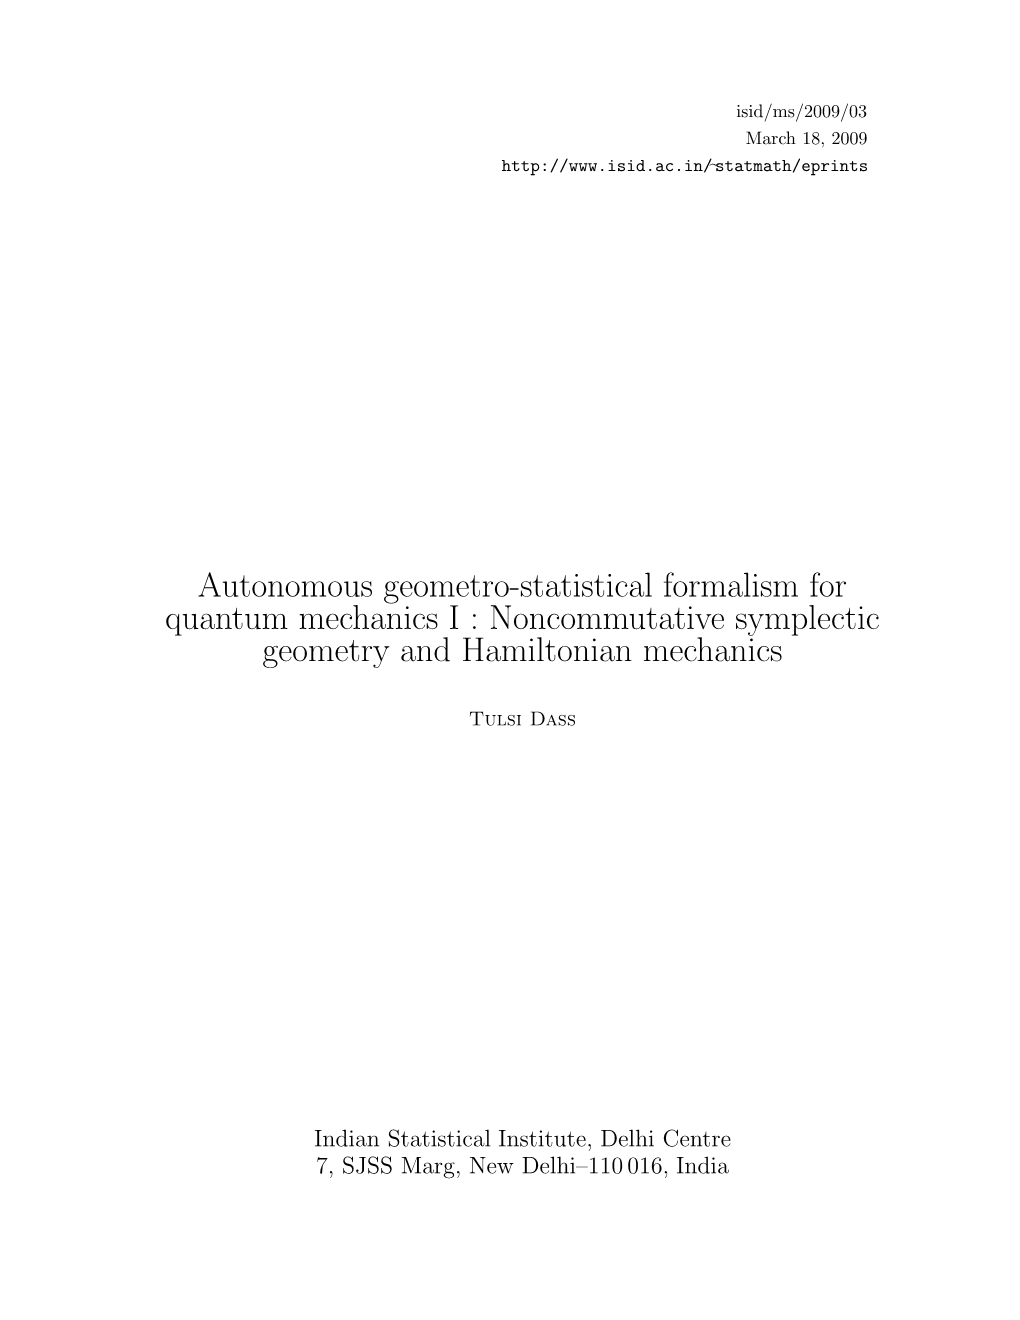 Noncommutative Symplectic Geometry and Hamiltonian Mechanics